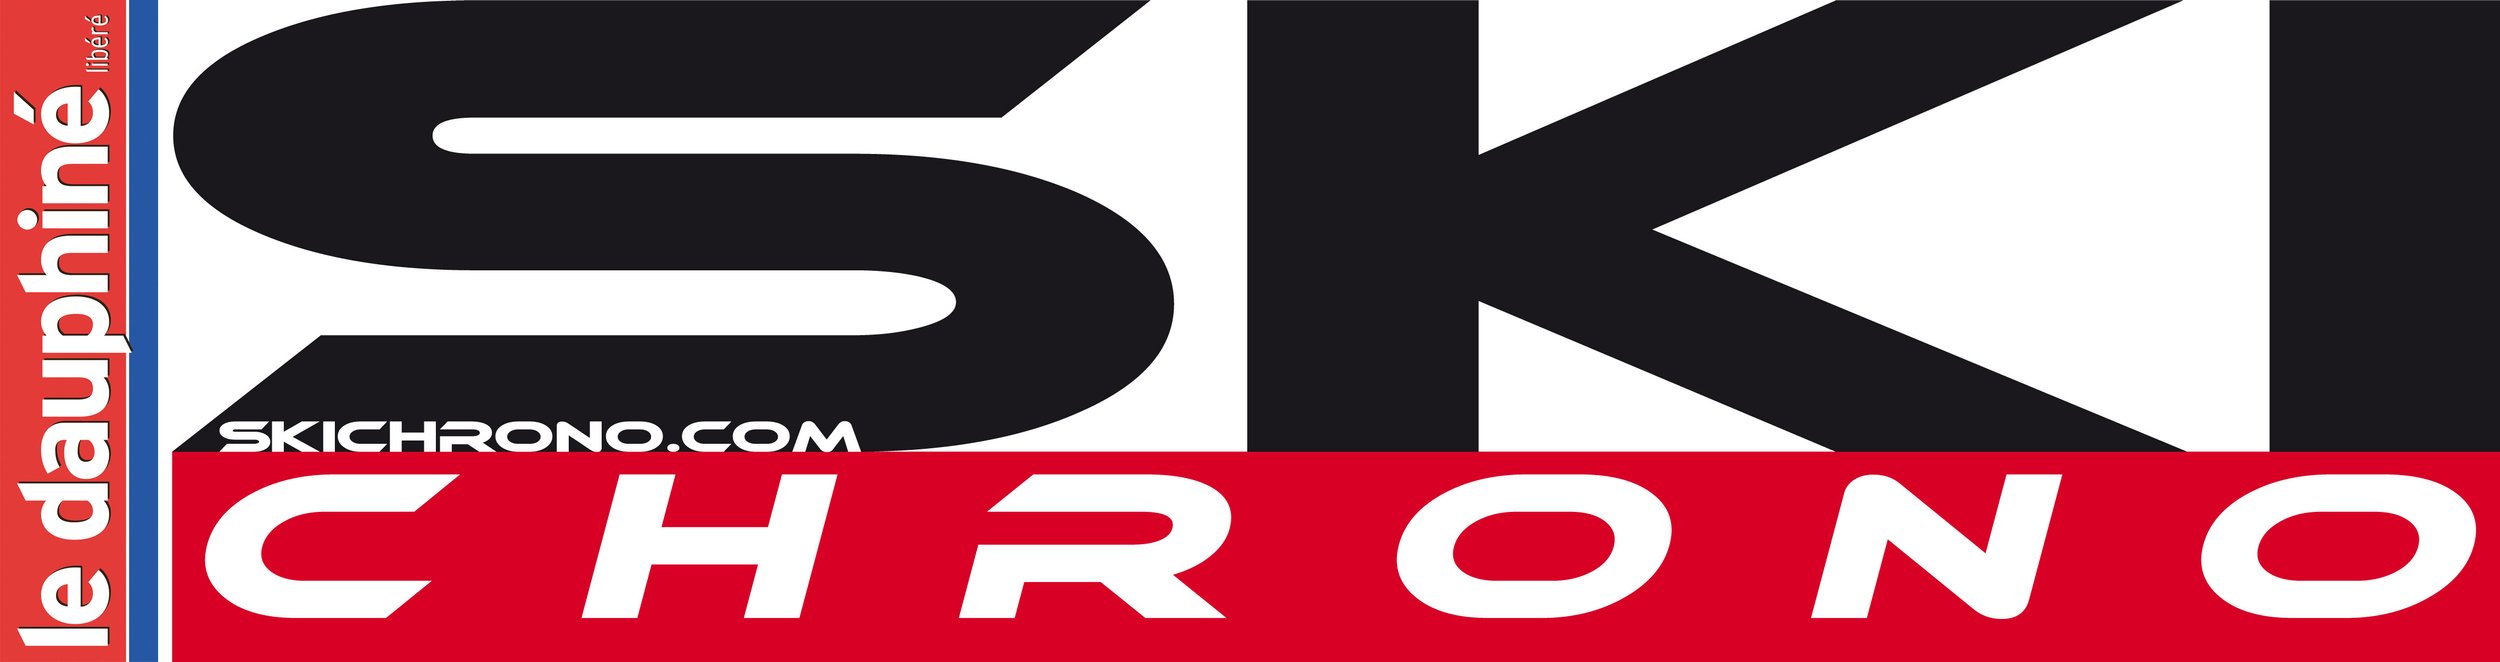 Logo_Ski_Chrono_Promo_site_DL_New.jpg